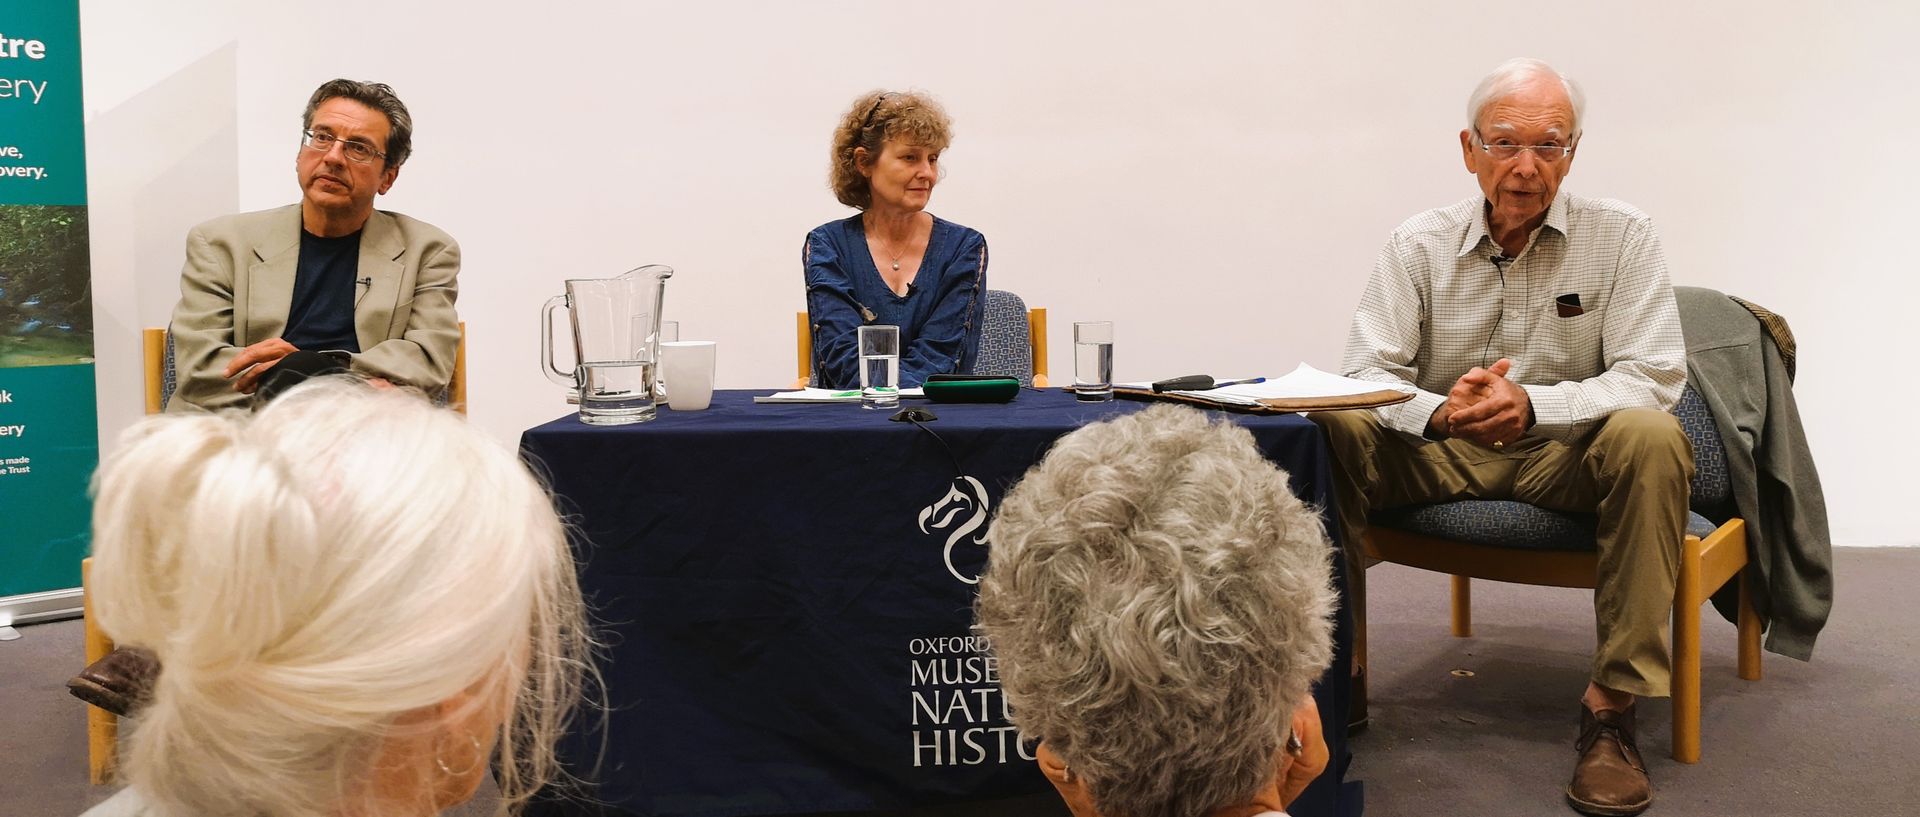 Left to right: George Monbiot, Professor Dame E.J. Milner-Gulland, Allan Savory